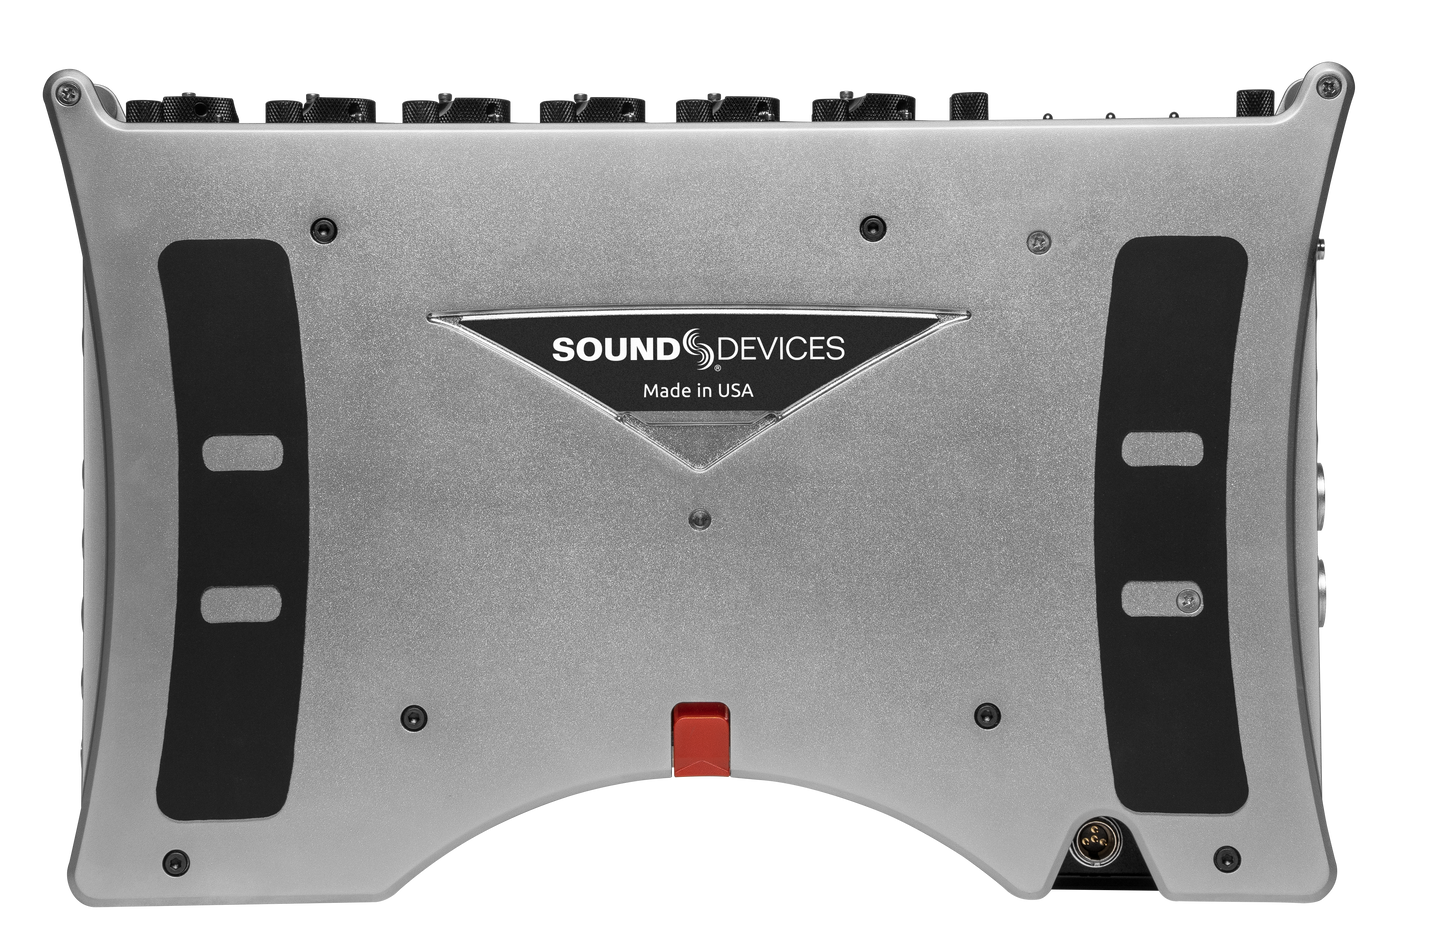 Sound Devices SCORPIO Premium Portable Mixer-Recorder